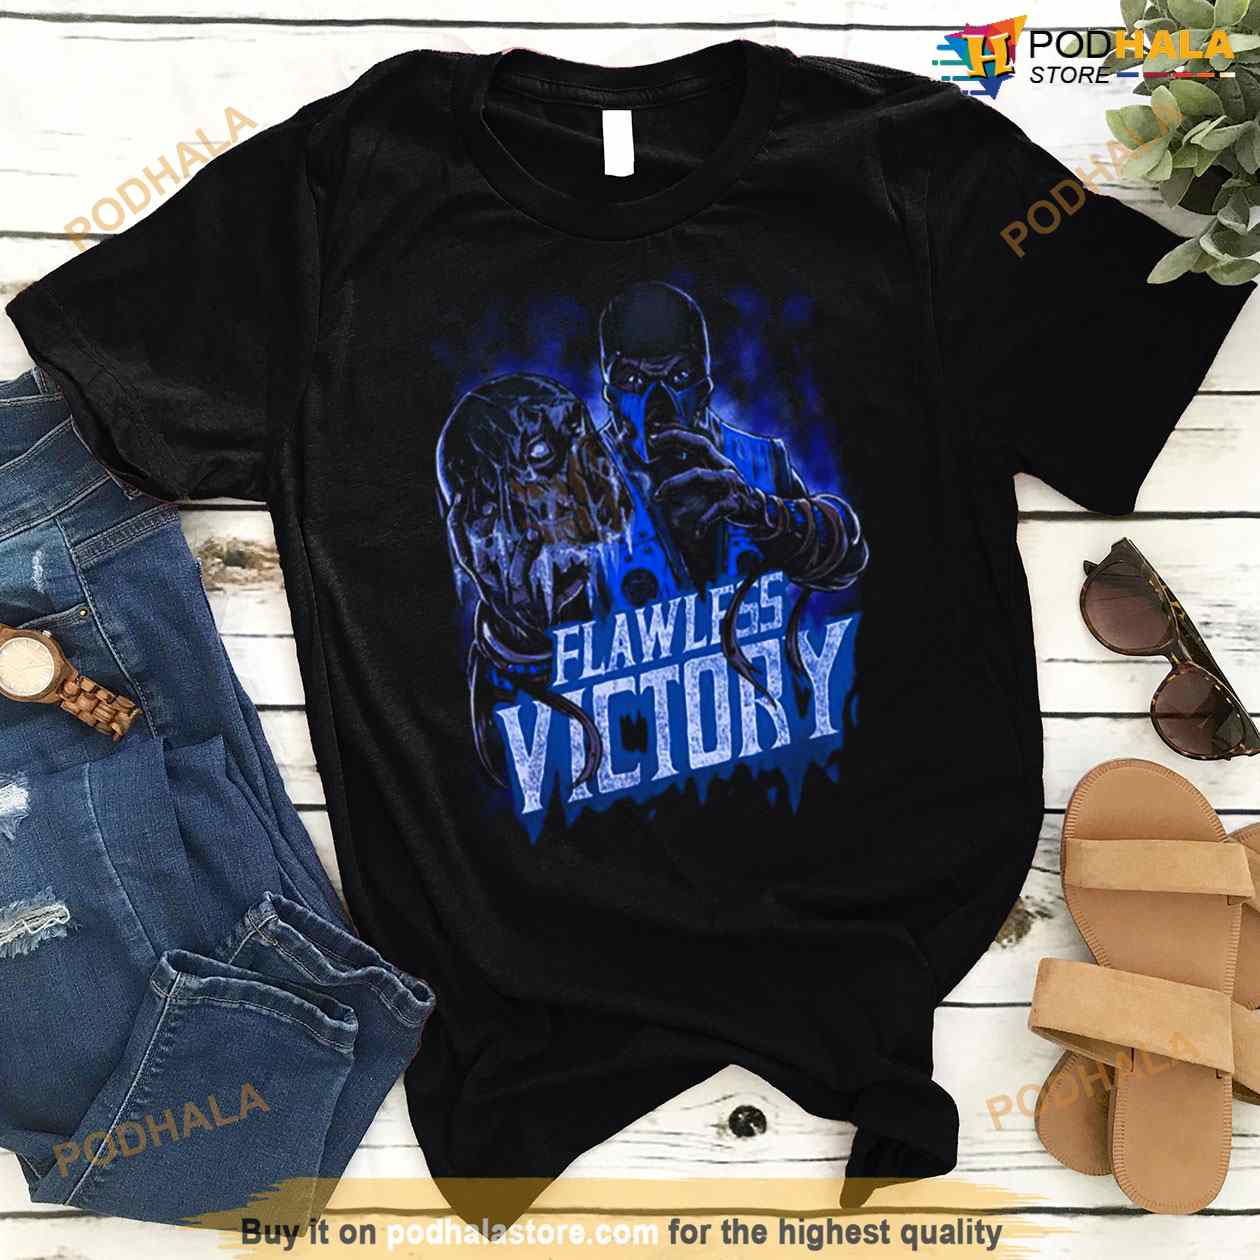 Flawless Victory Mortal Kombat T-Shirt